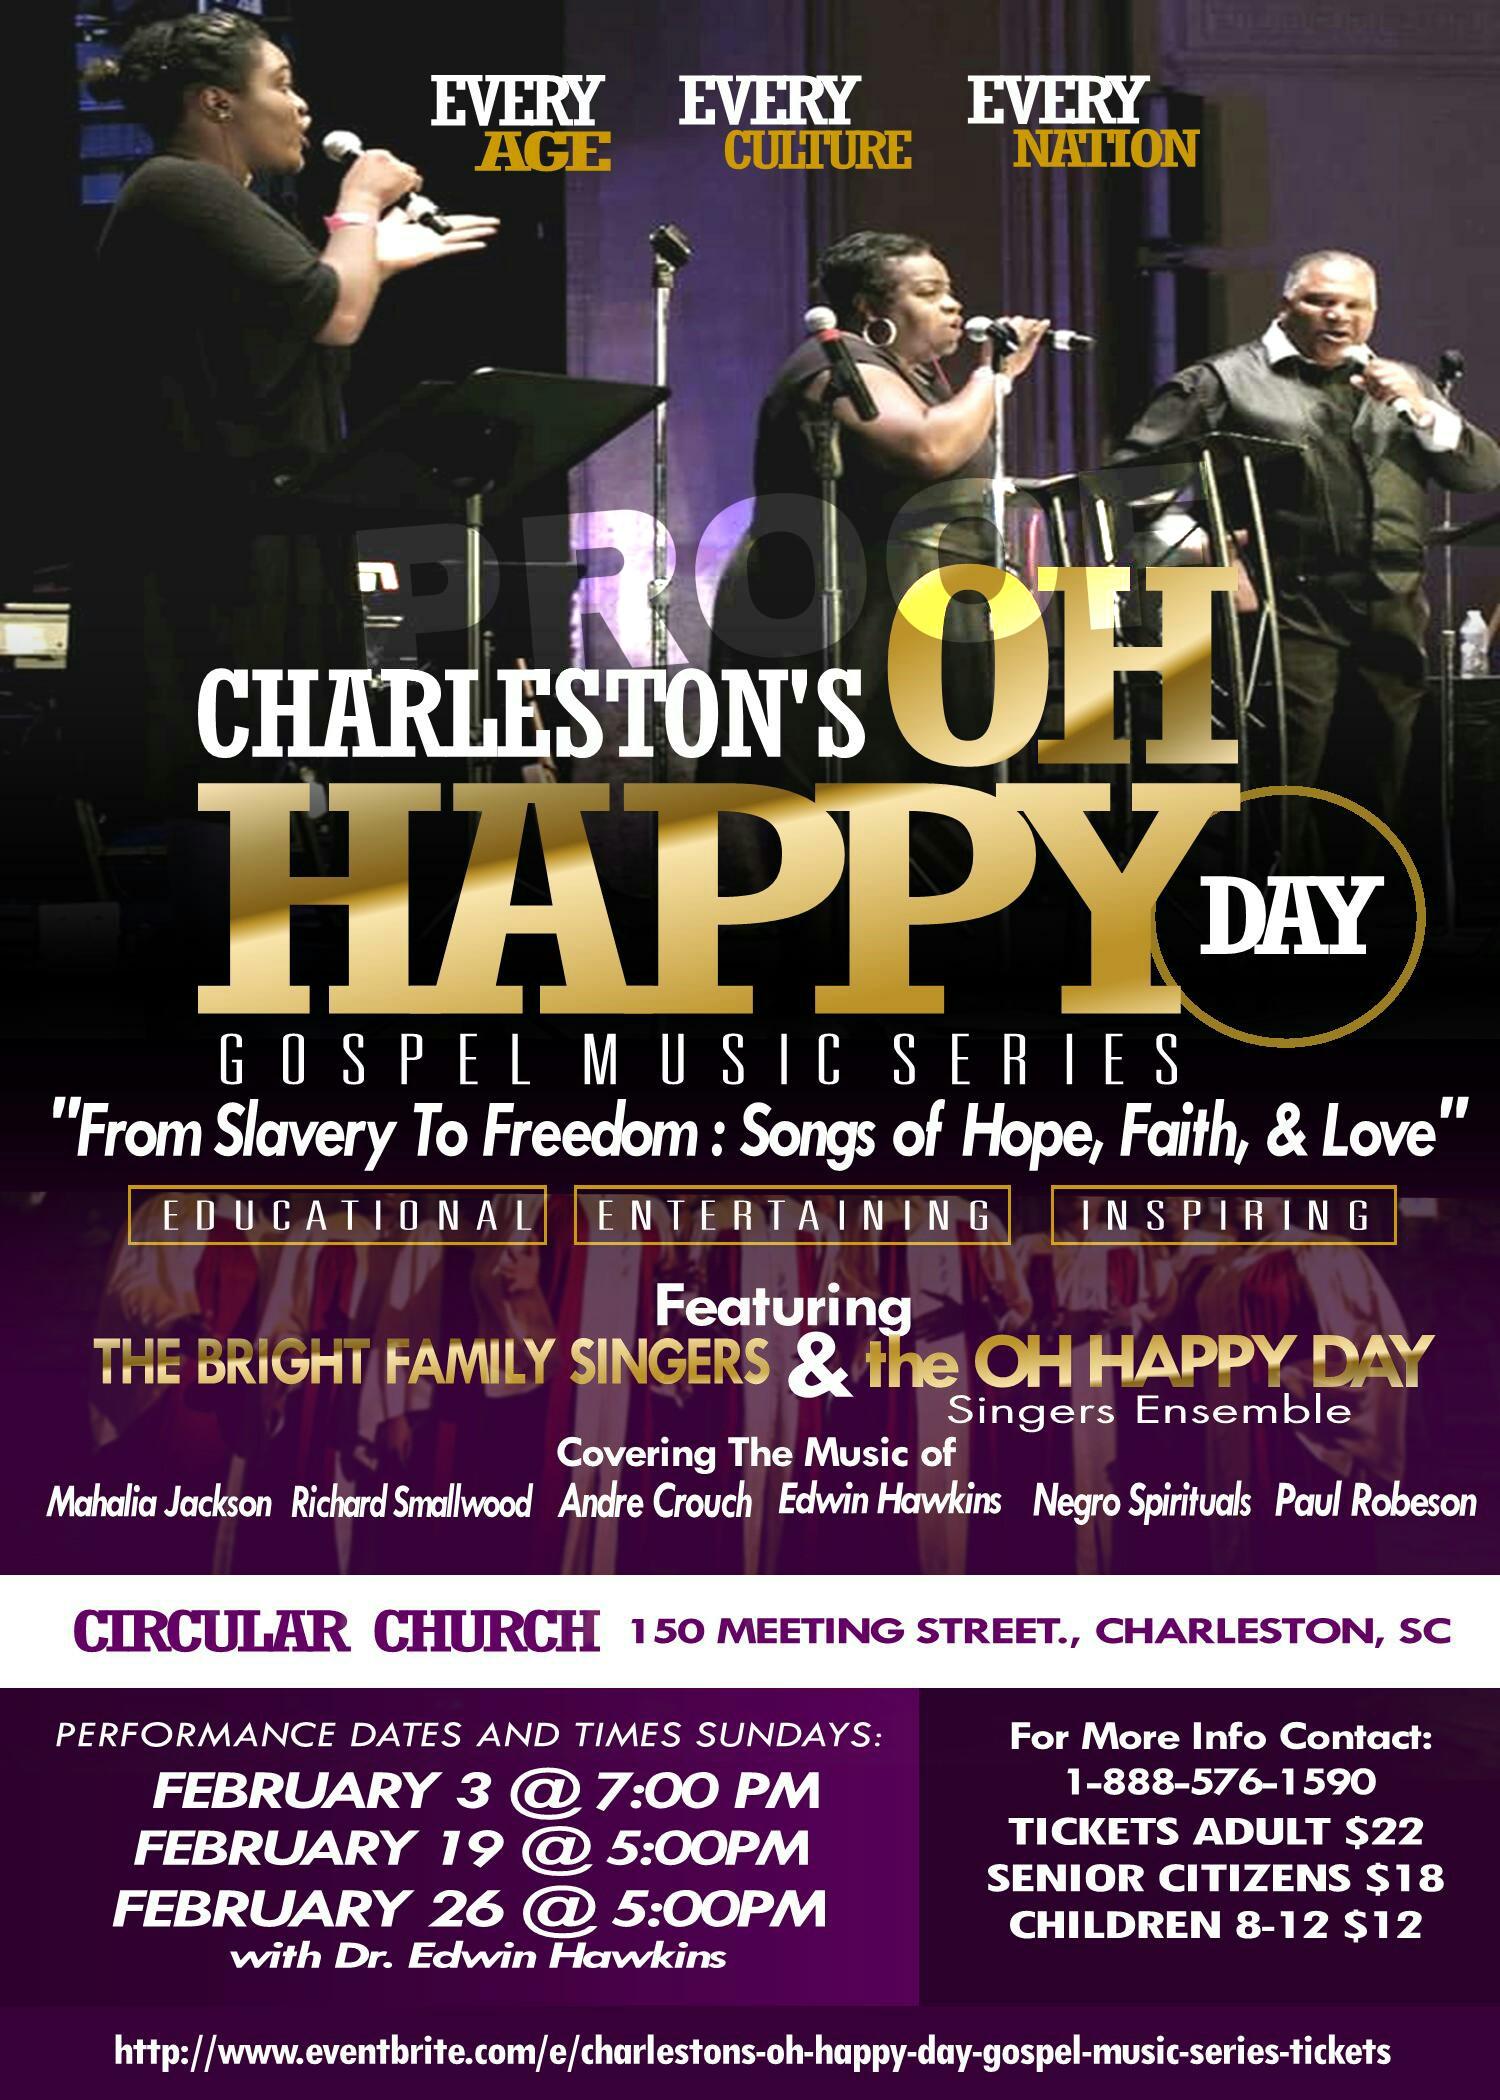 Charleston's Oh Happy Day Gospel Music Series